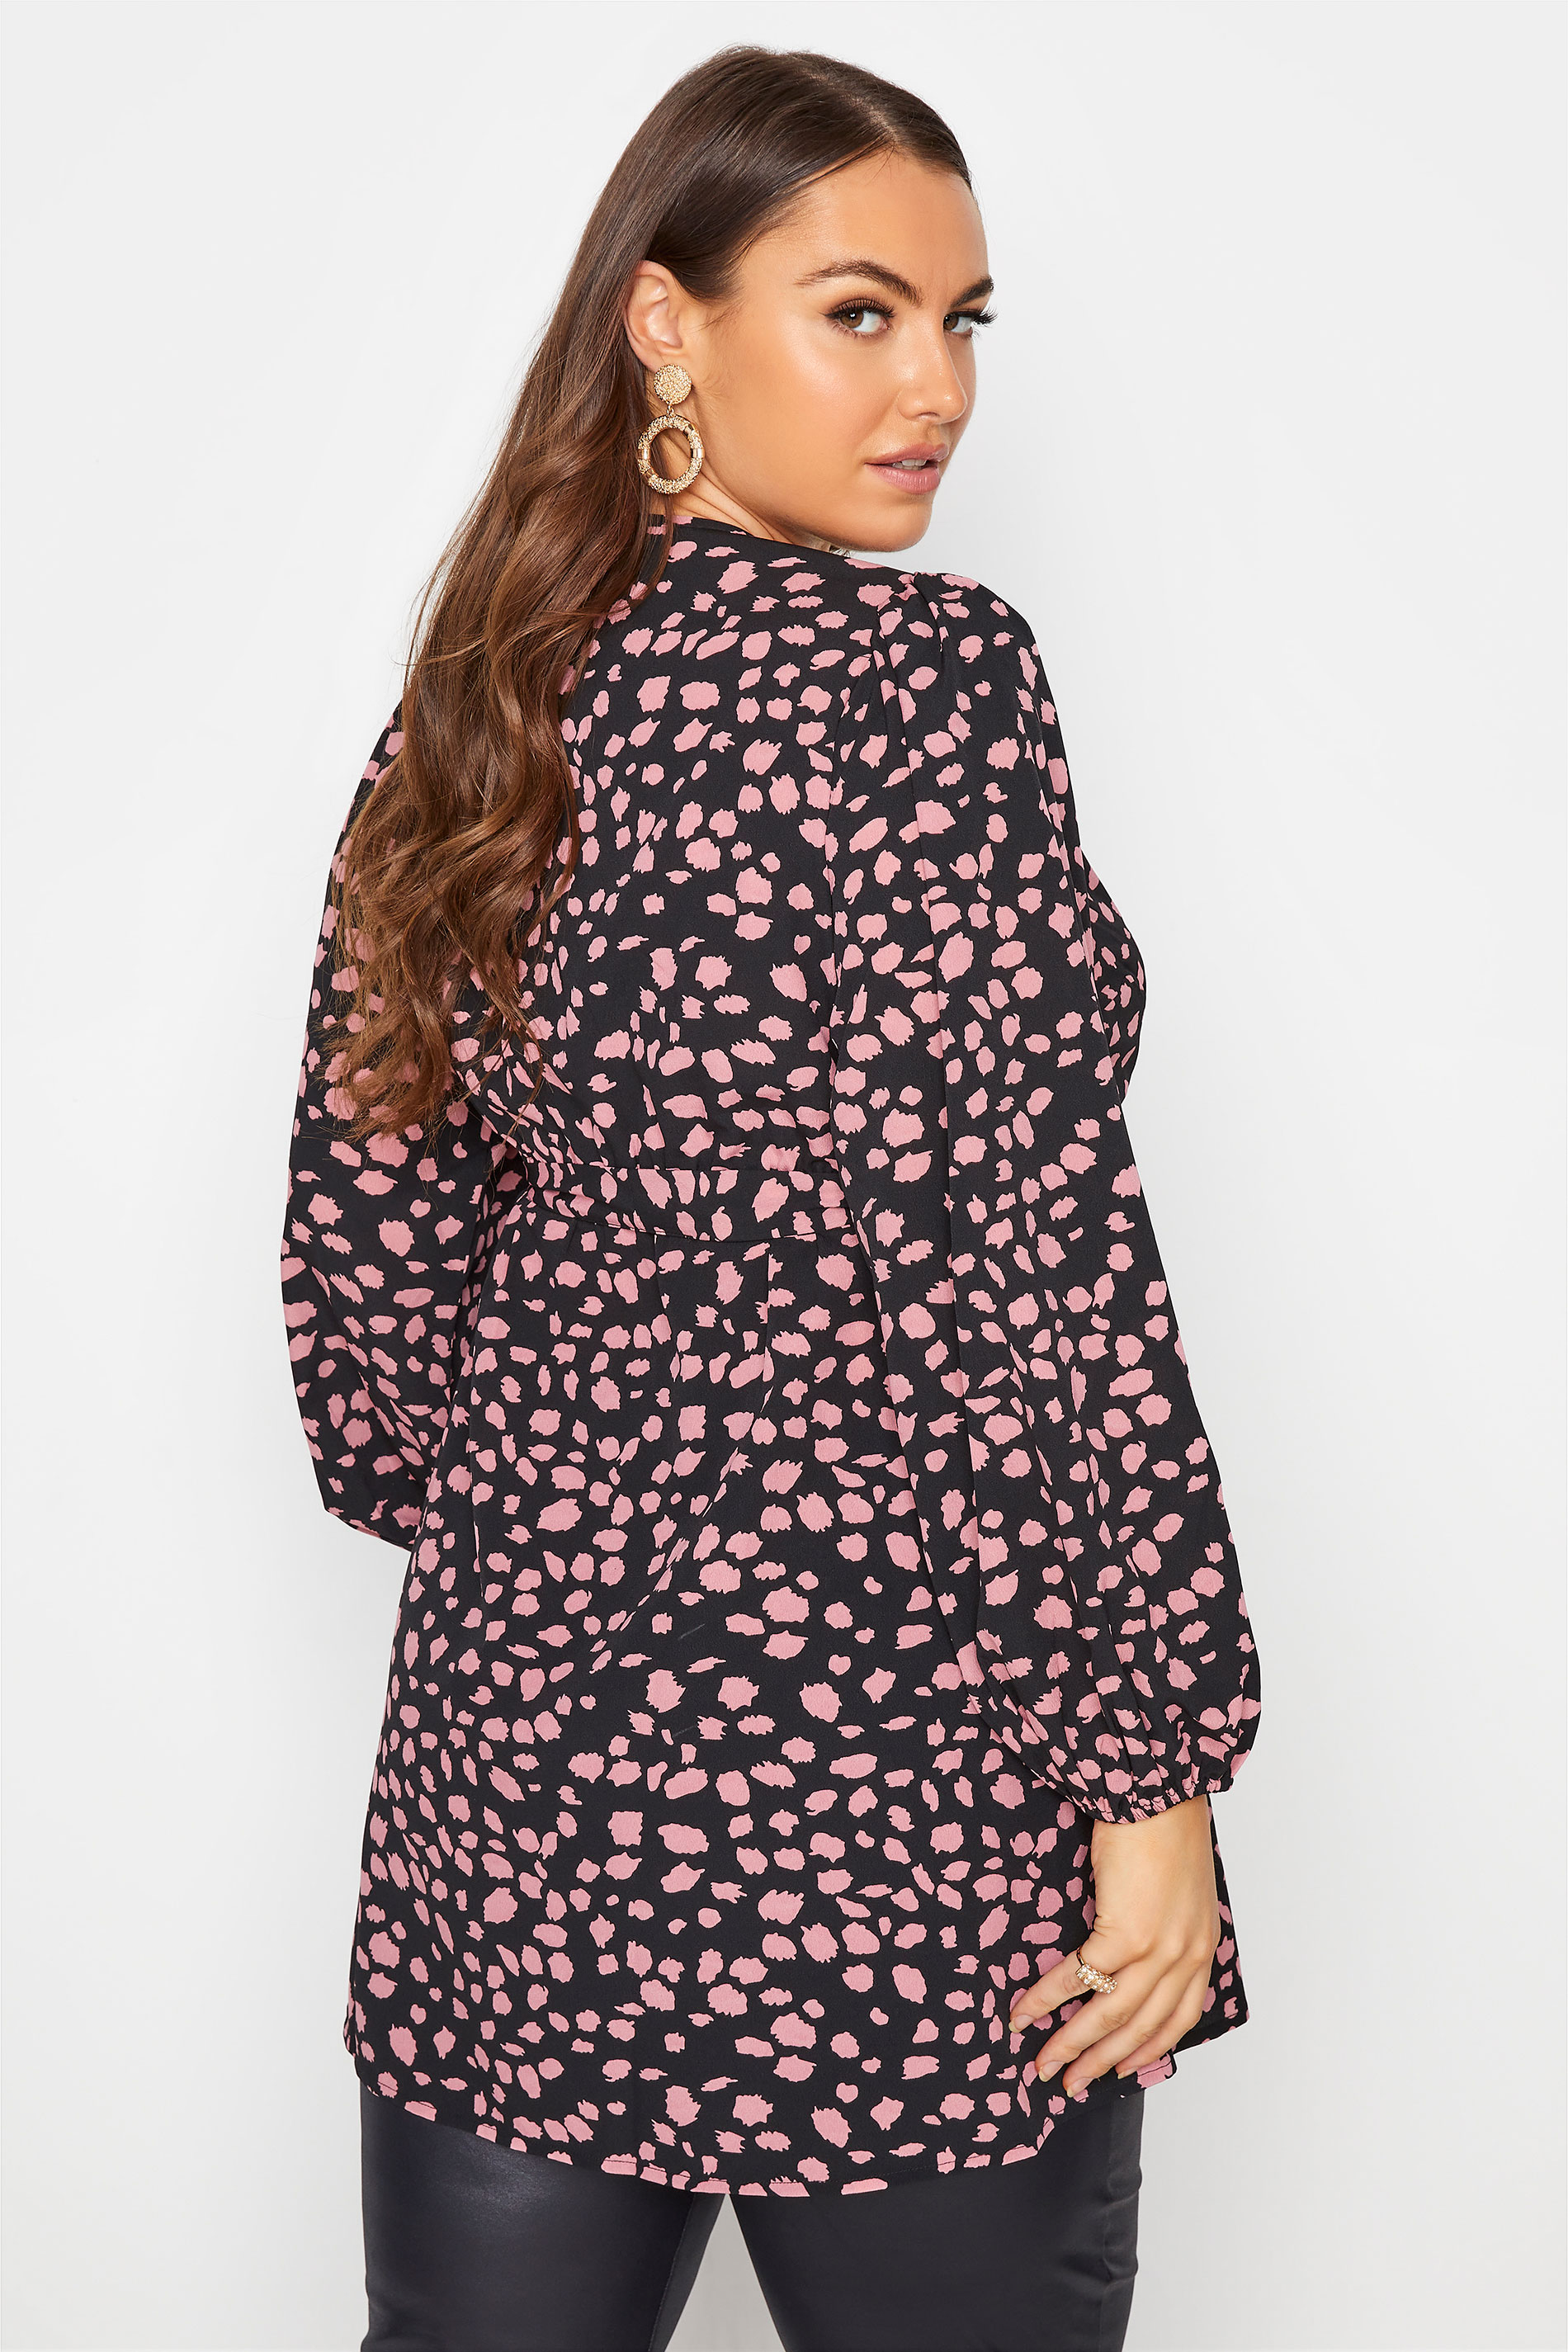 Plus Size Black Dalmatian Print Wrap Top | Yours Clothing 3